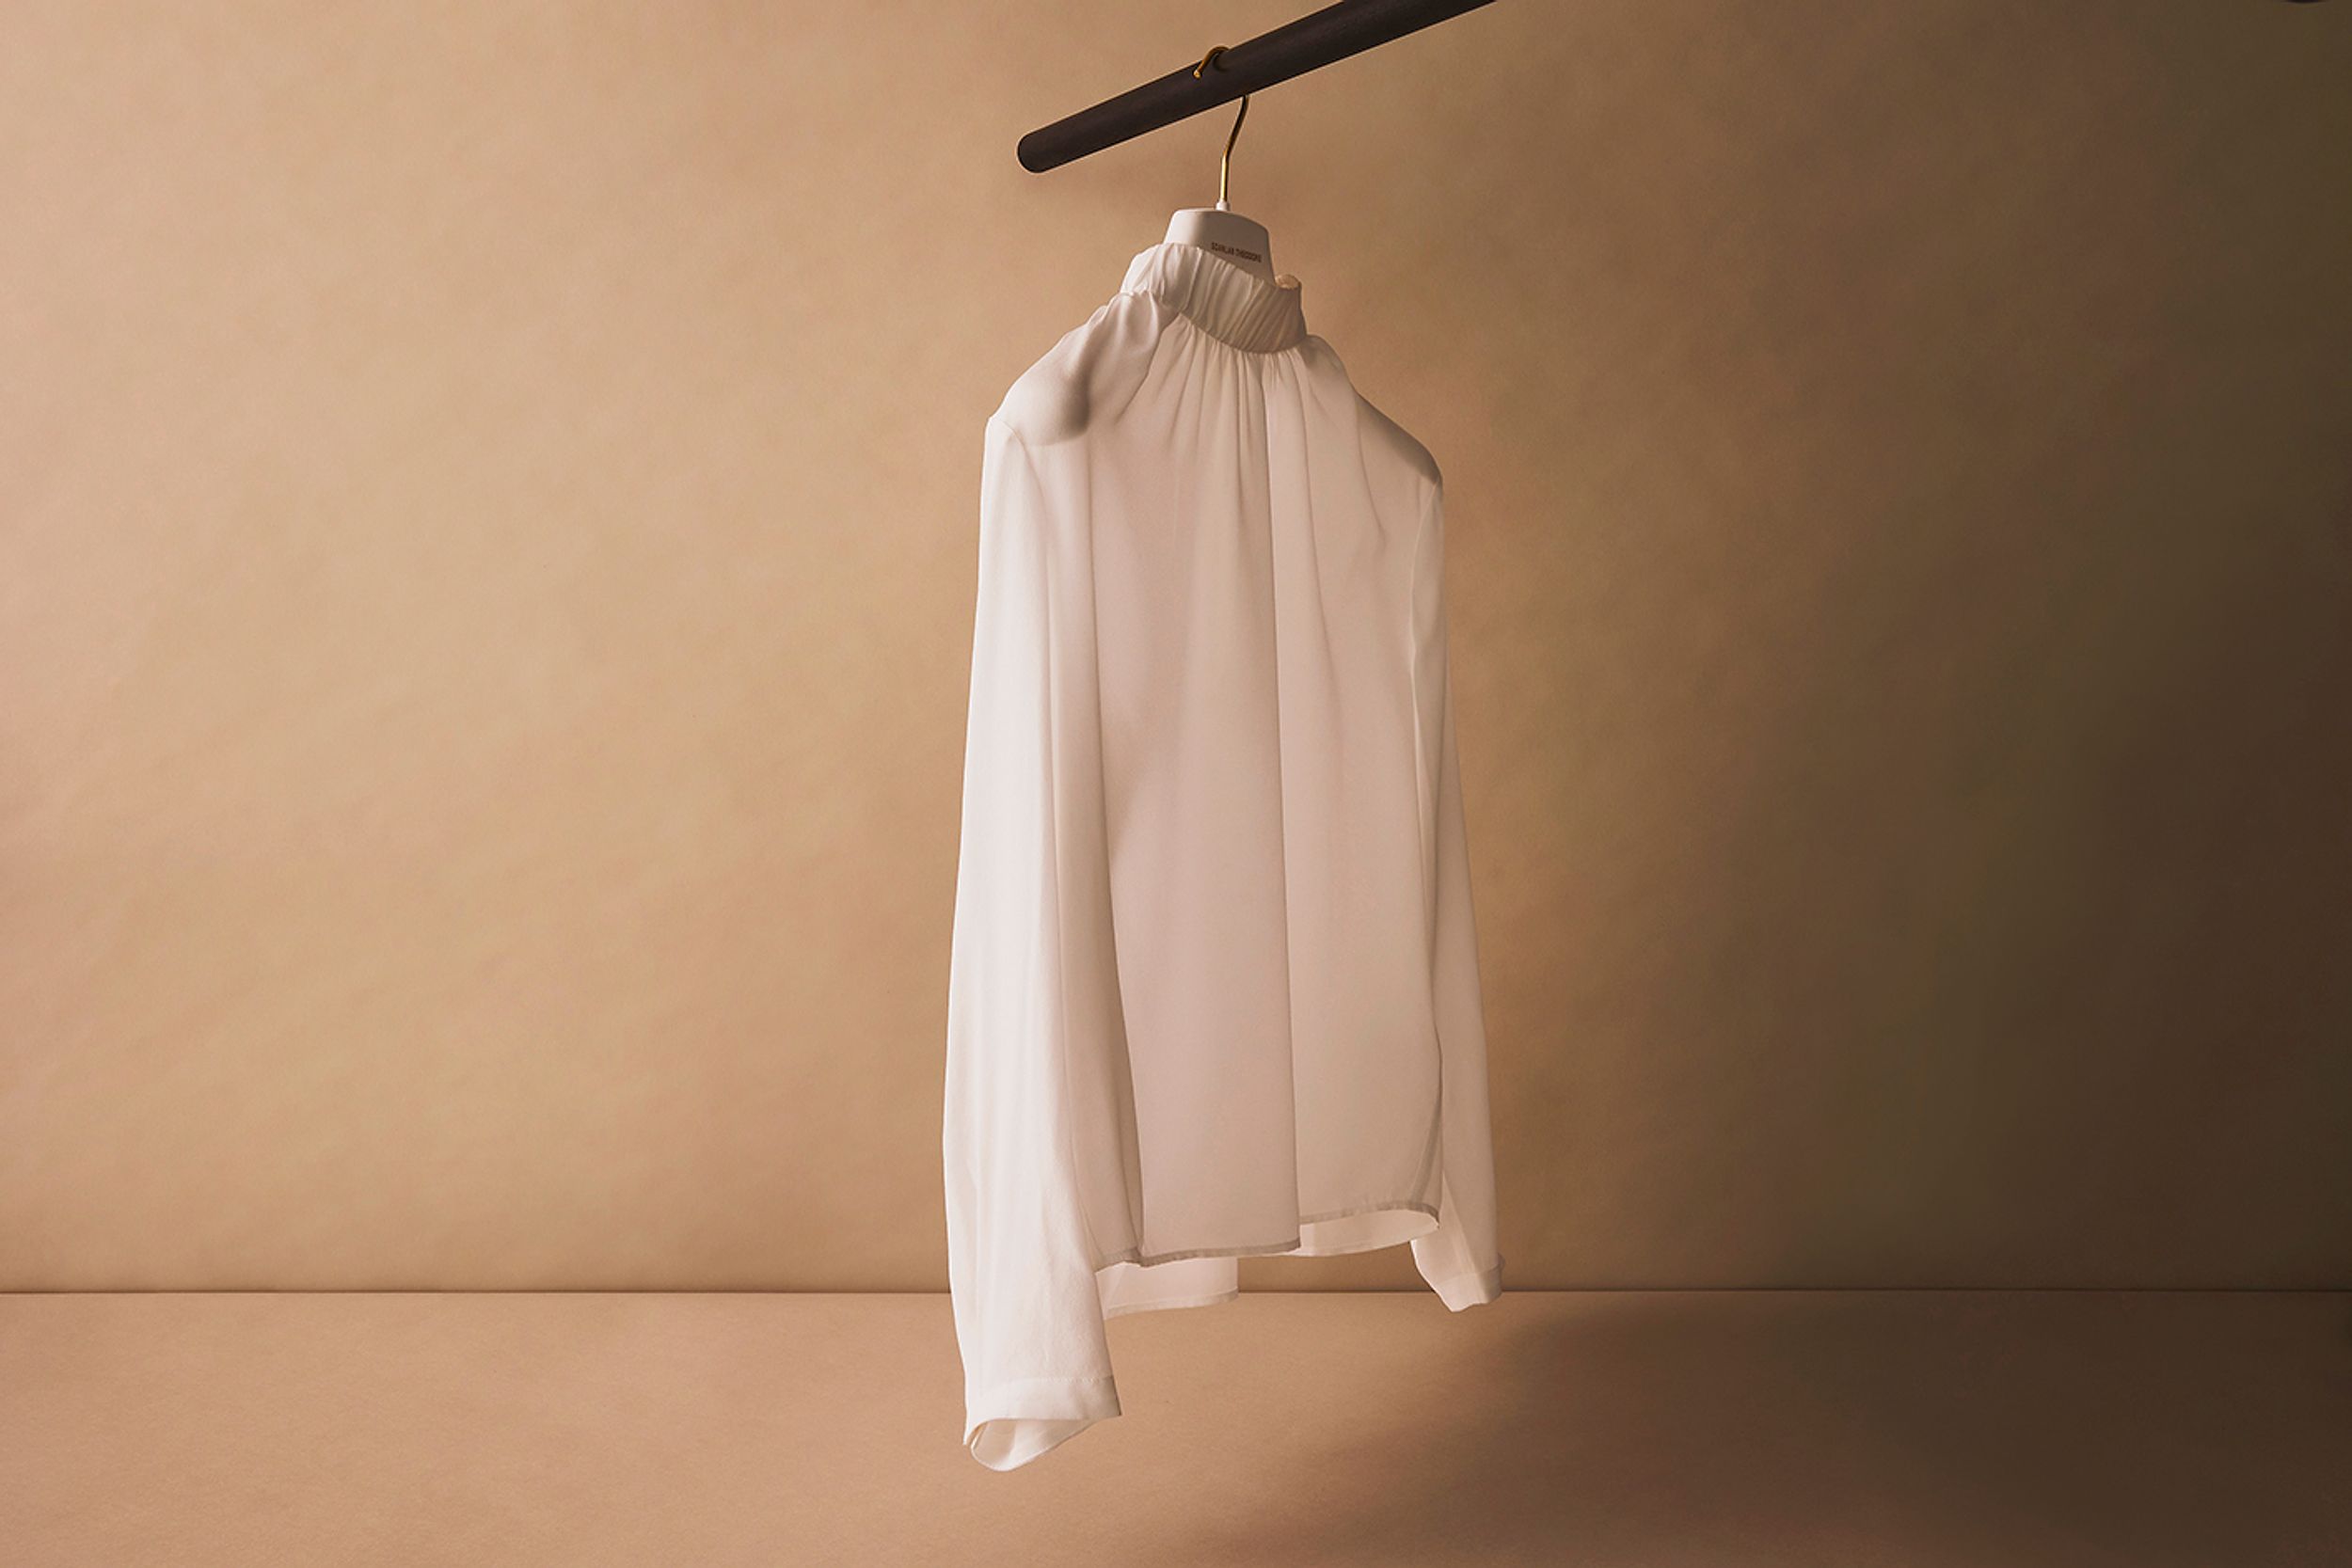 Scanlan Theodore white silk blouse hanging on a rail.